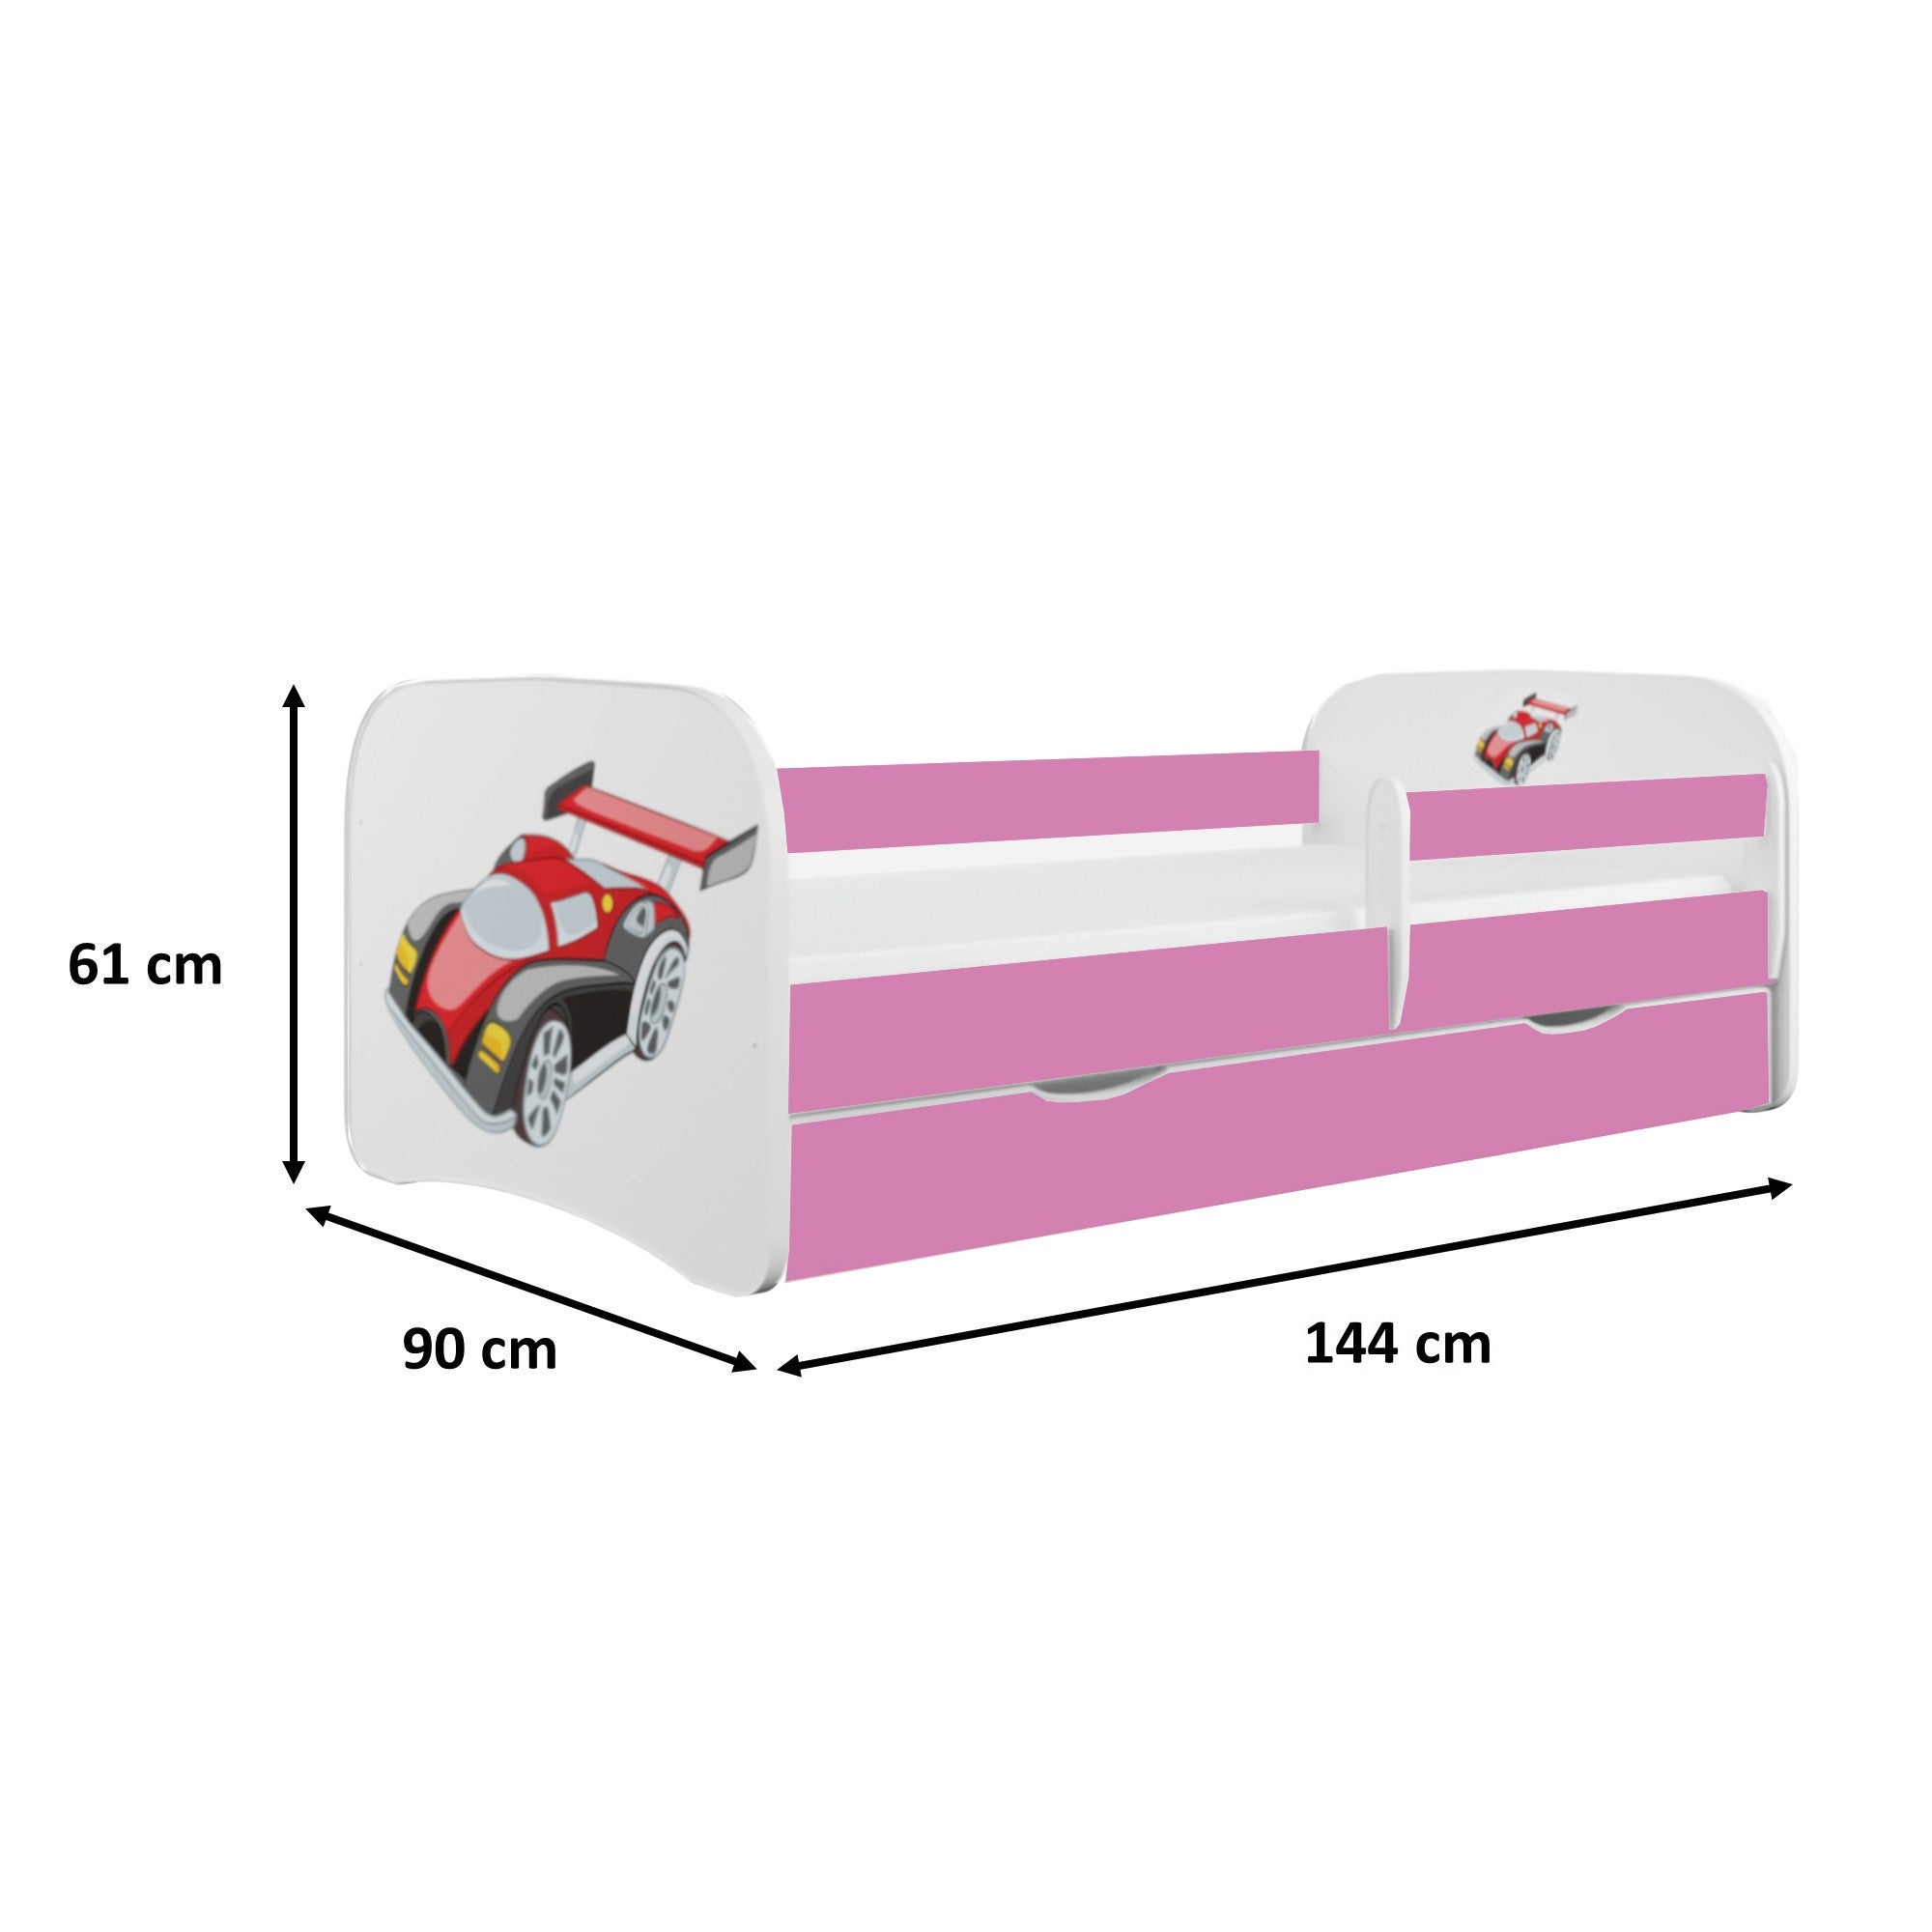 Kinderbett Jona inkl. Rollrost + Matratze + Bettschublade in weiß, blau, rosa oder grün 70*140 cm